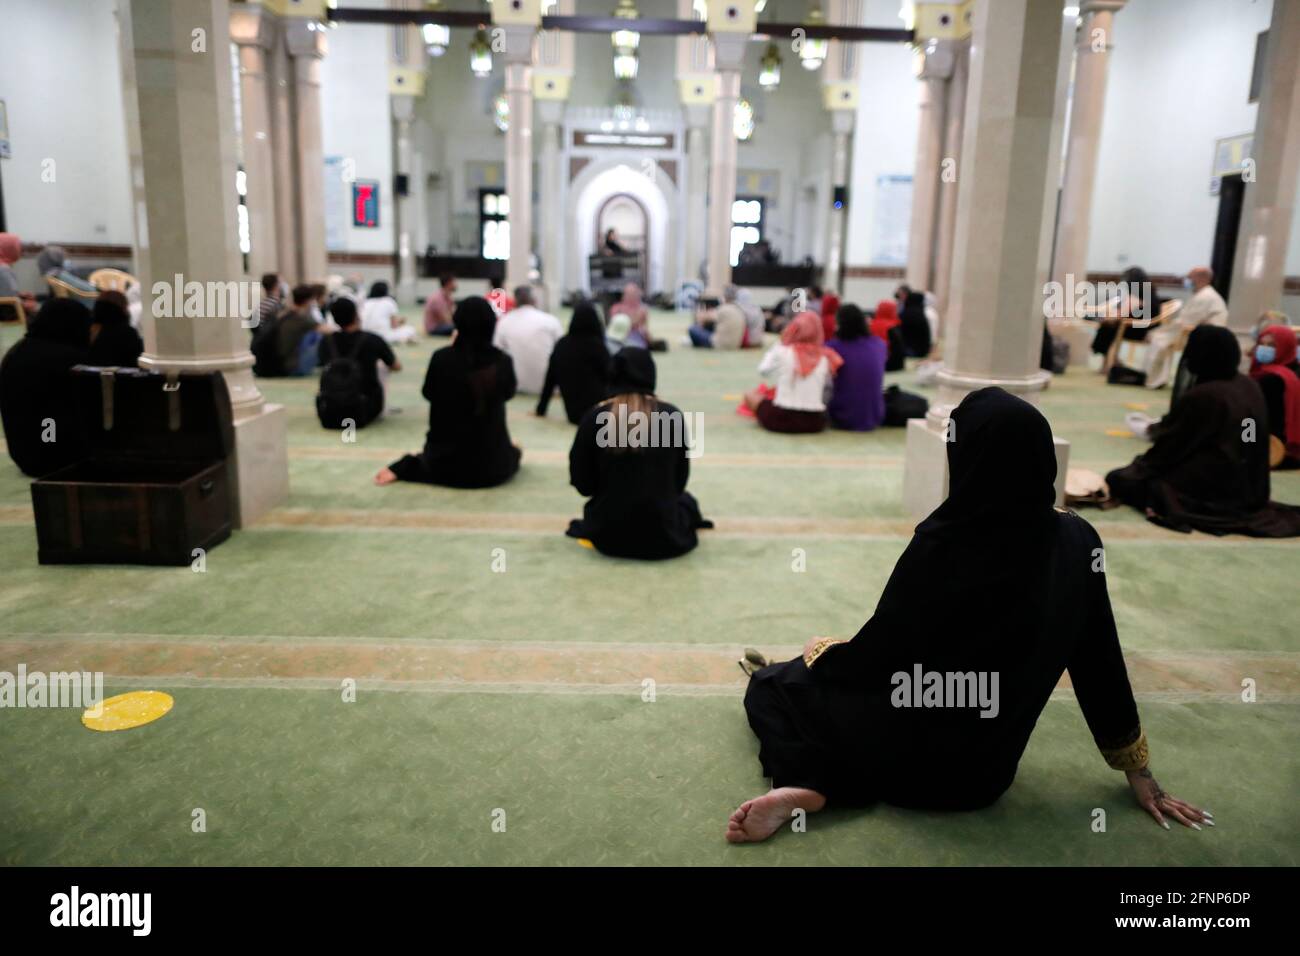 Visita alla Moschea di Jumeirah. La moschea accoglie i visitatori di tutte le fedi. Dubai. Emirati Arabi Uniti Foto Stock